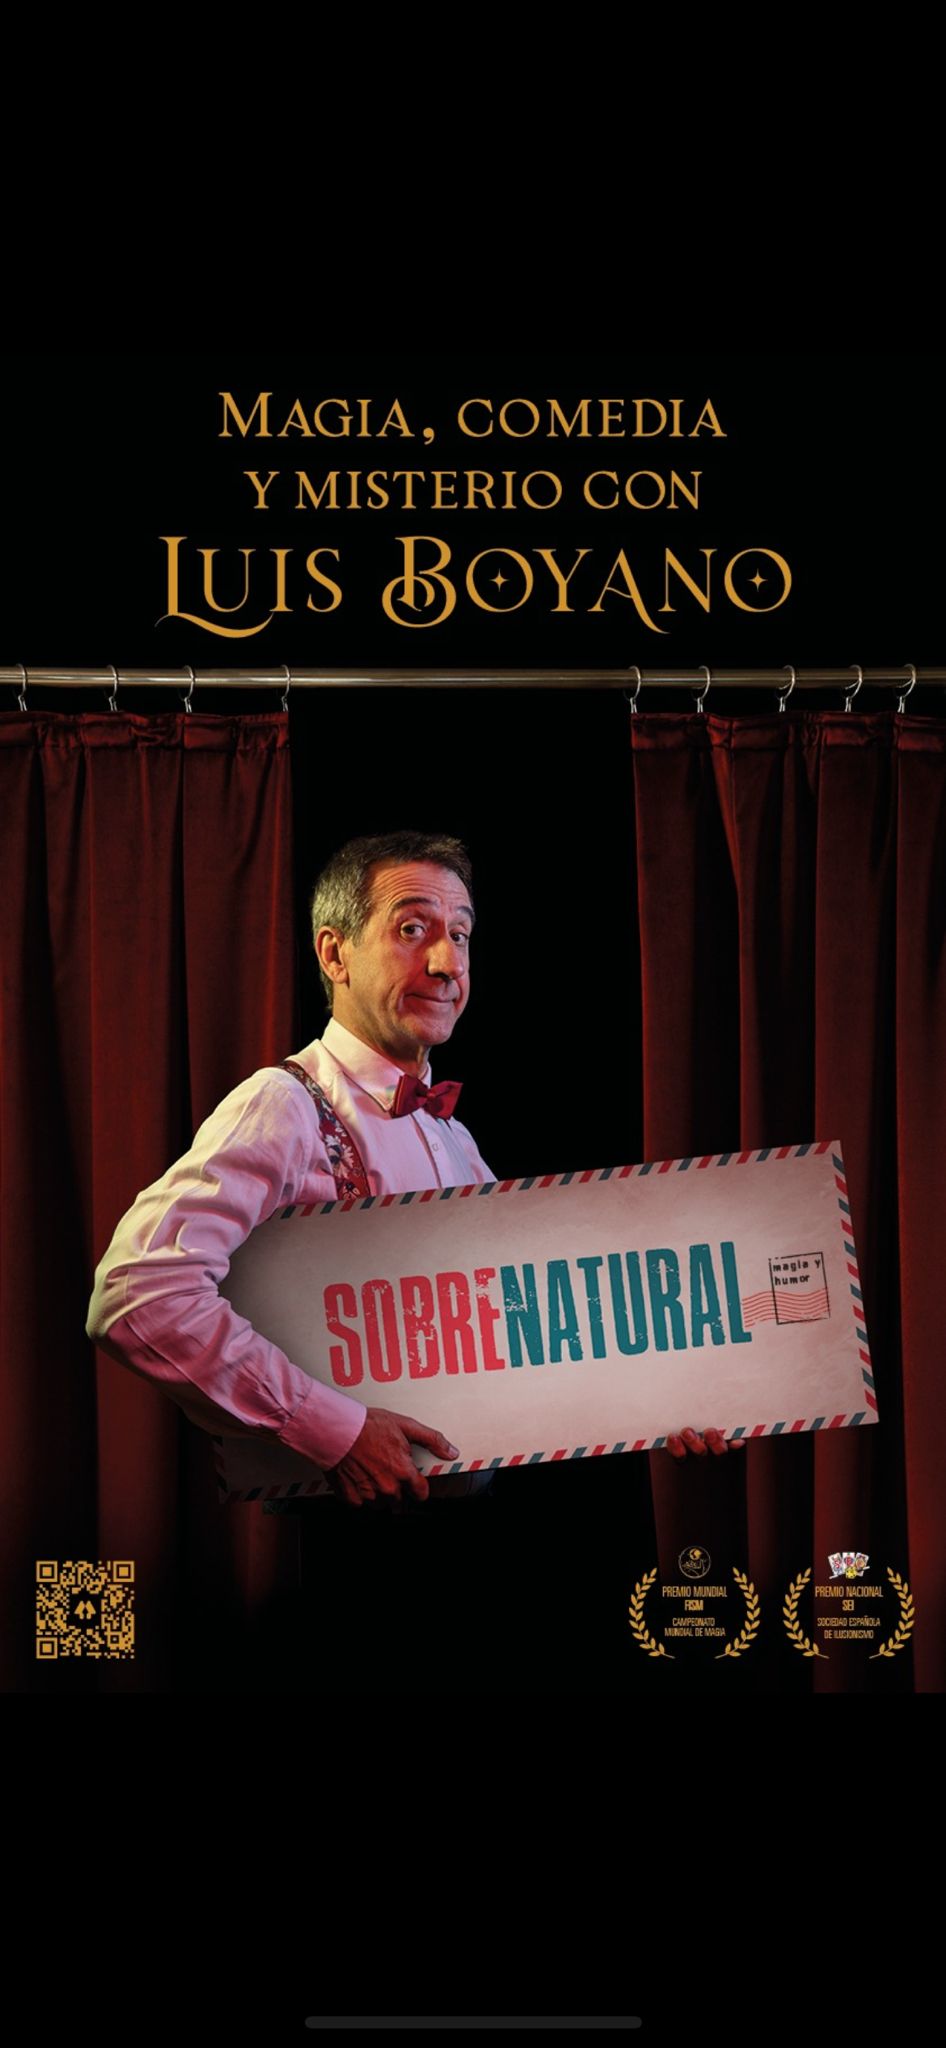 Luis Boyano